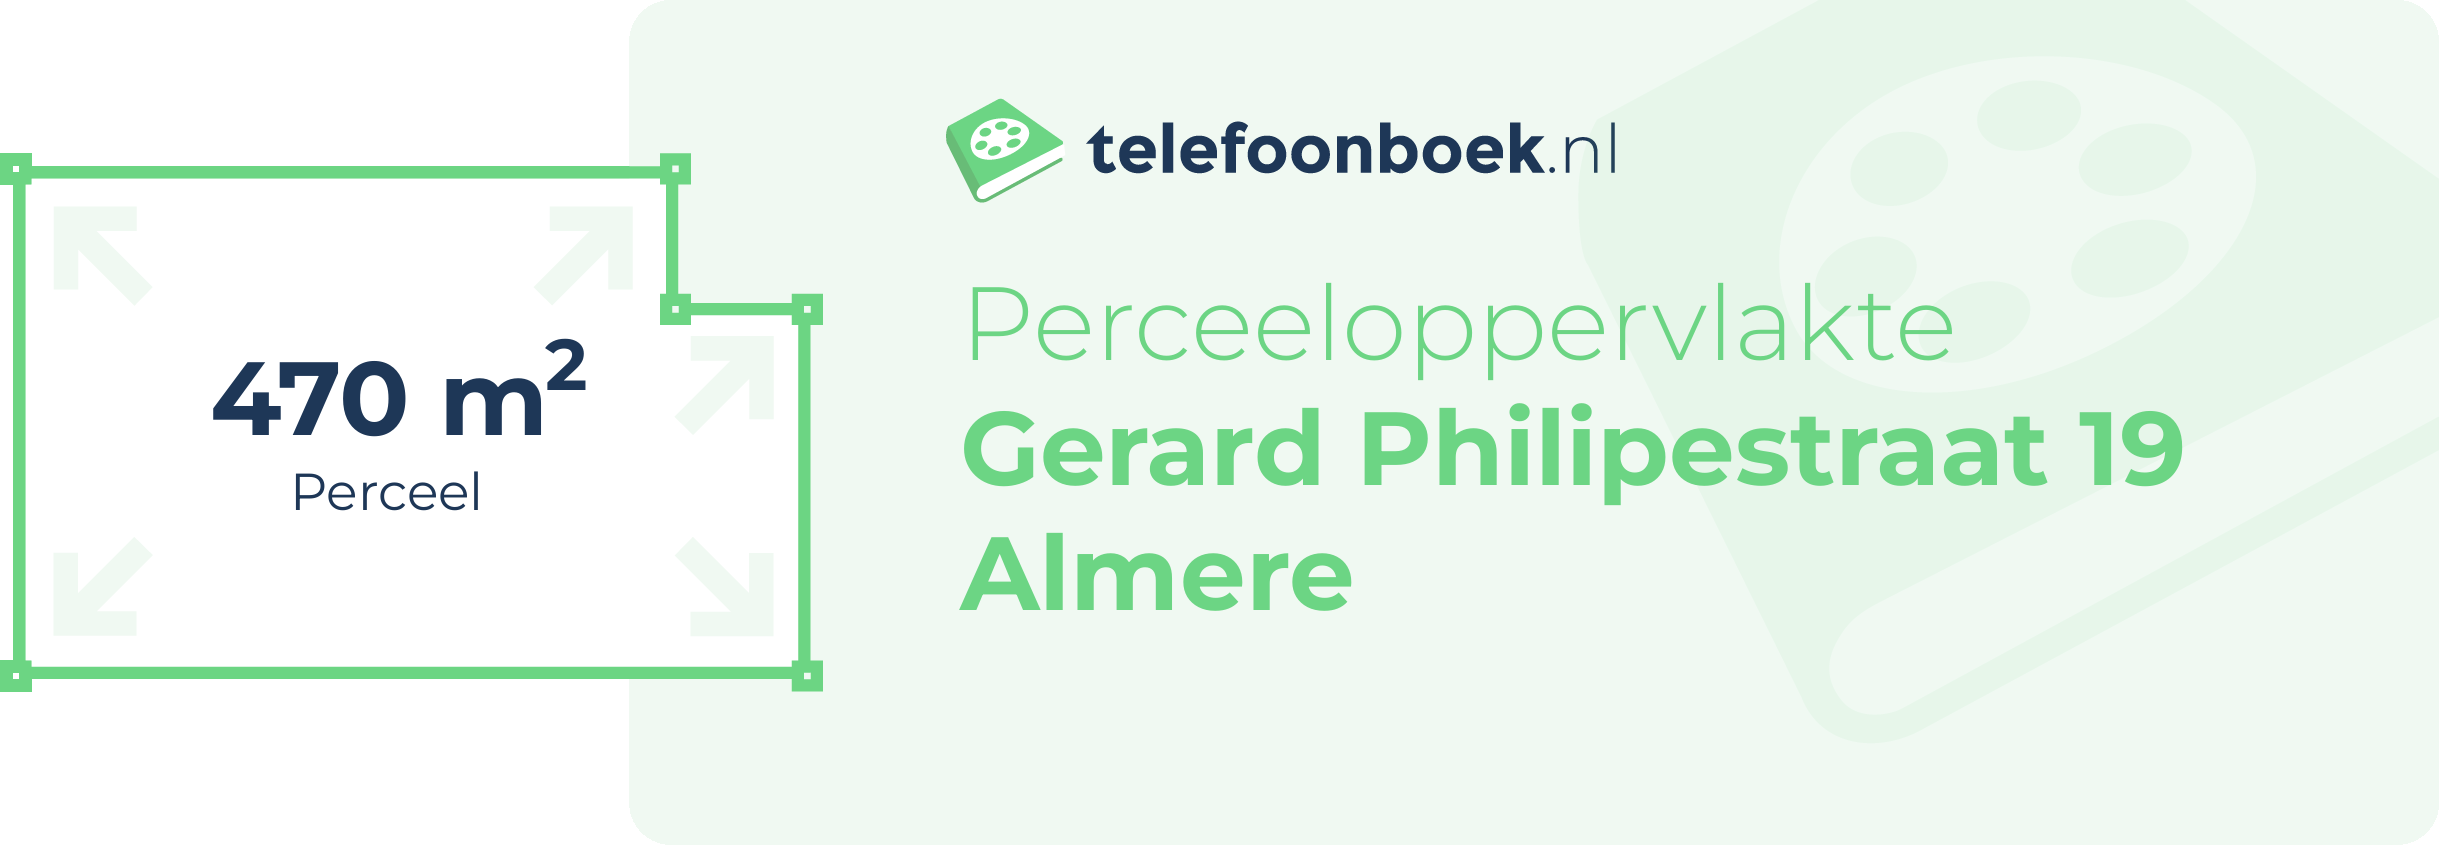 Perceeloppervlakte Gerard Philipestraat 19 Almere